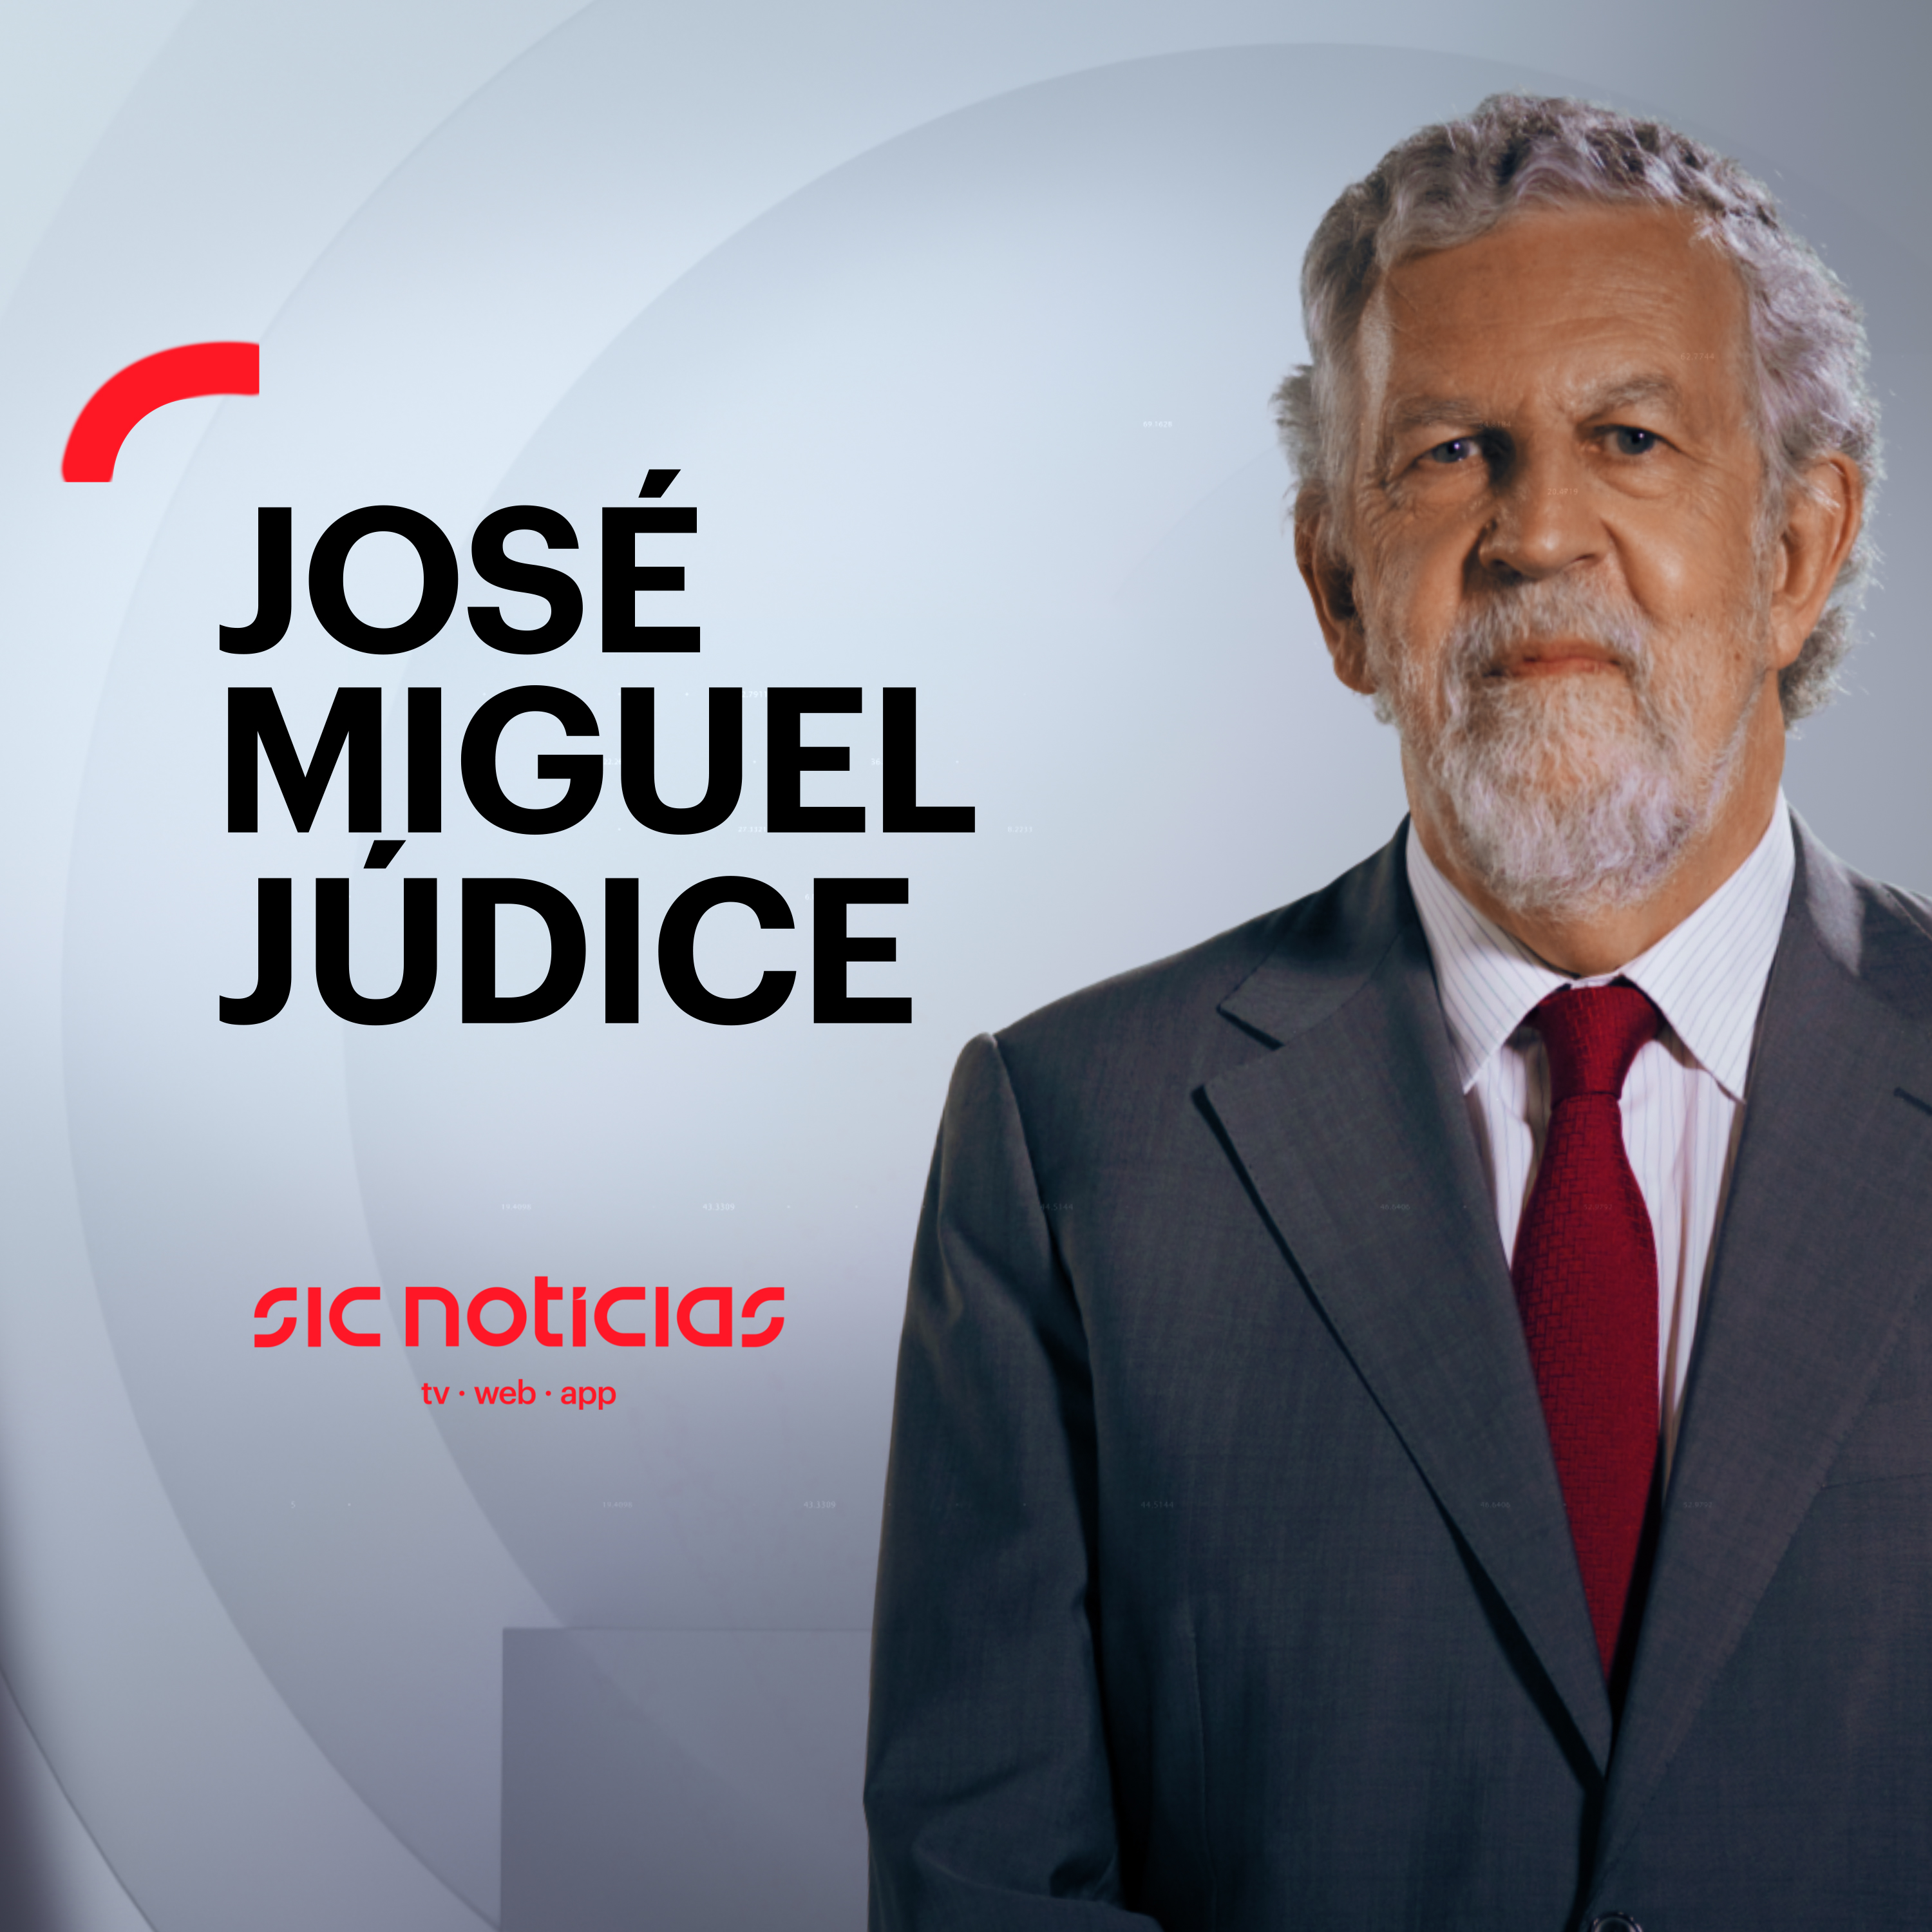 Legislativas: análise dos dois primeiros dias de debates políticos: por José Miguel Júdice